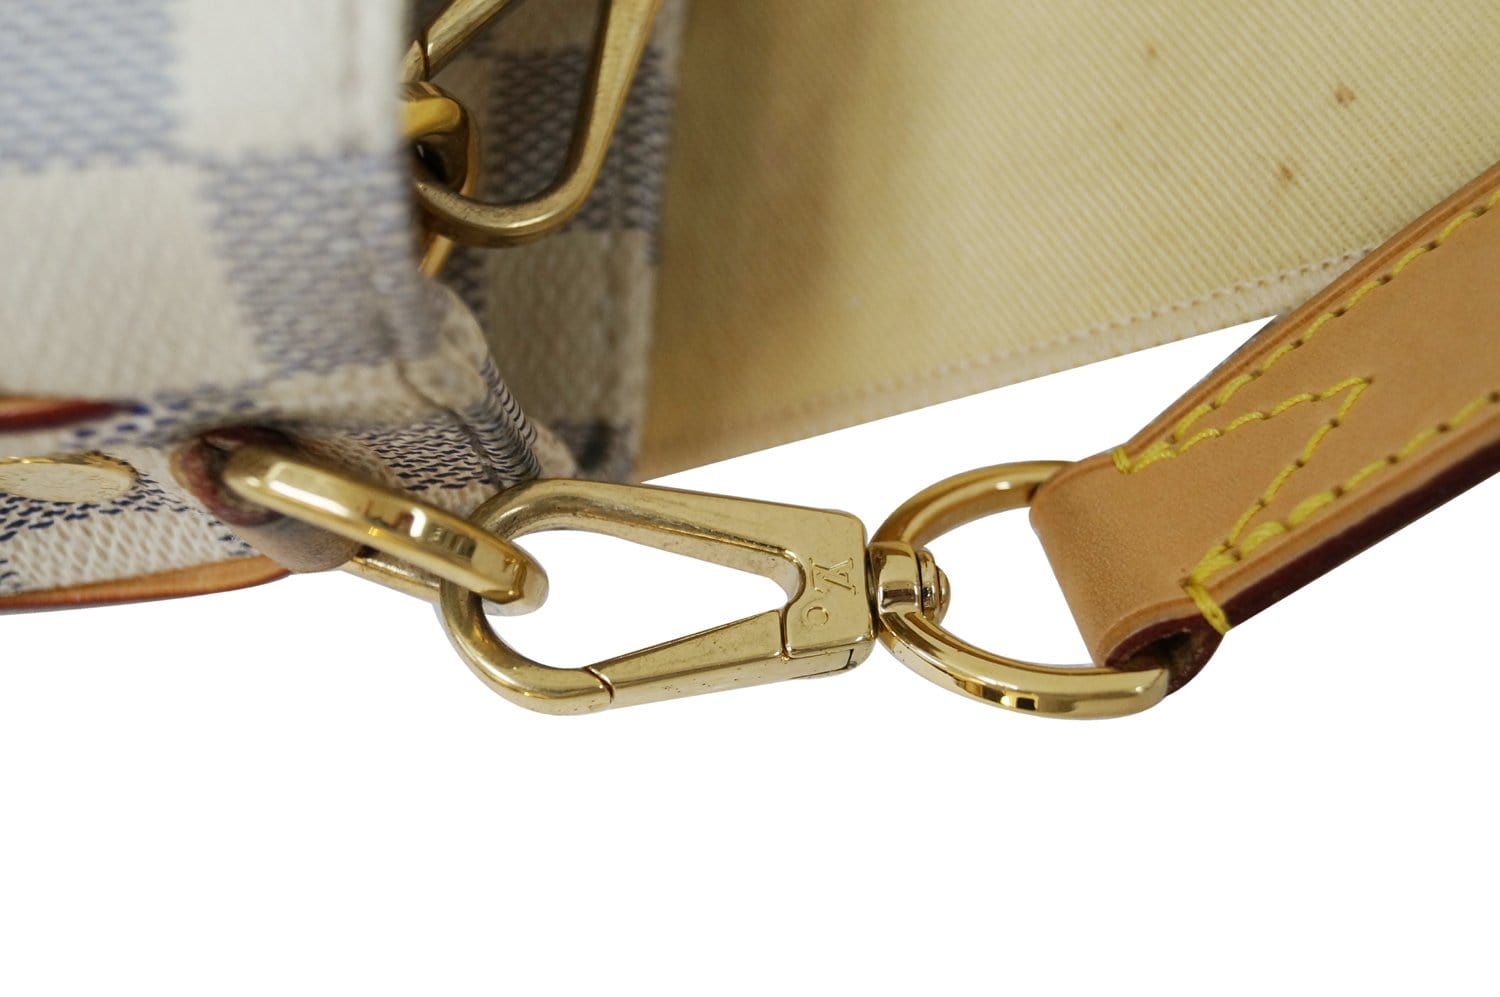 Louis Vuitton Buckle Satchel/Top Handle Bag Handbags & Bags for